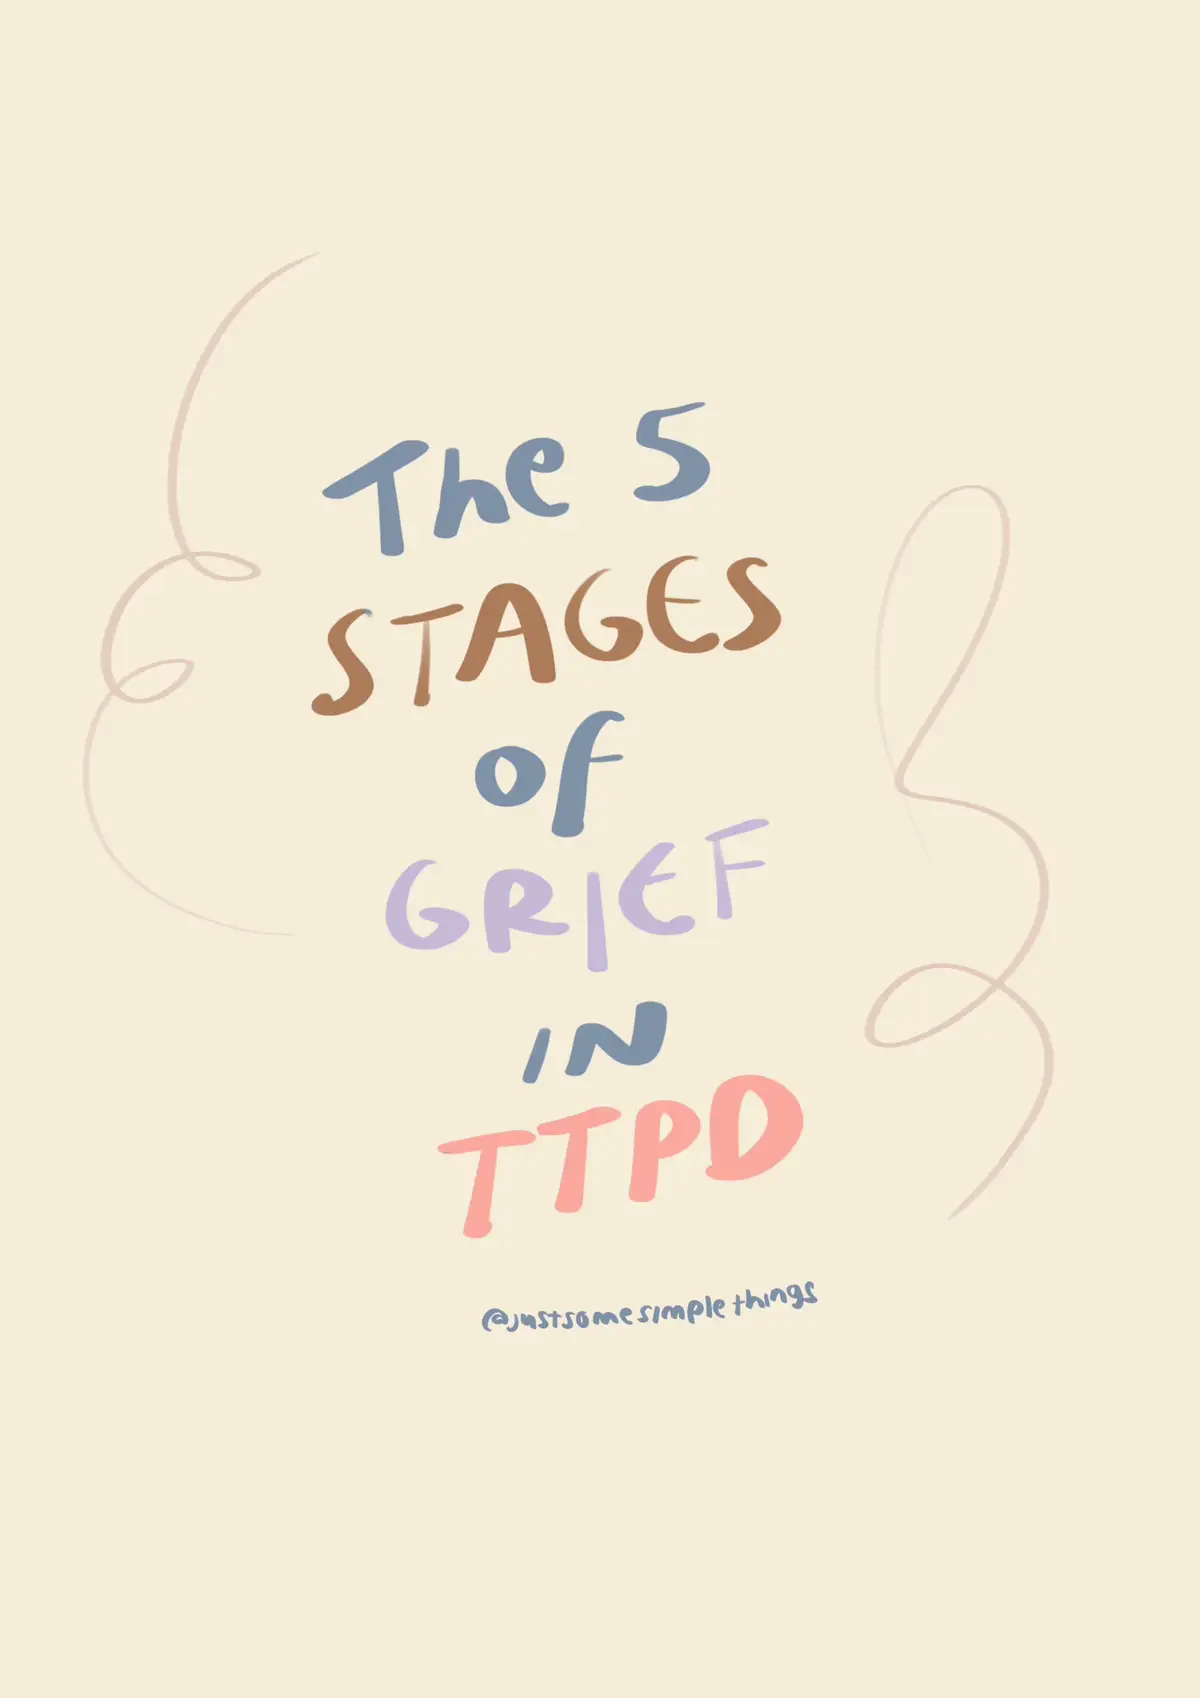 every word tells a story of healing and growth 🤍 #ttpd #thetorturedpoetsdepartment #swifties #taylorswiftlyrics #ttpdlyrics #healinglyrics #5stagesofgrief